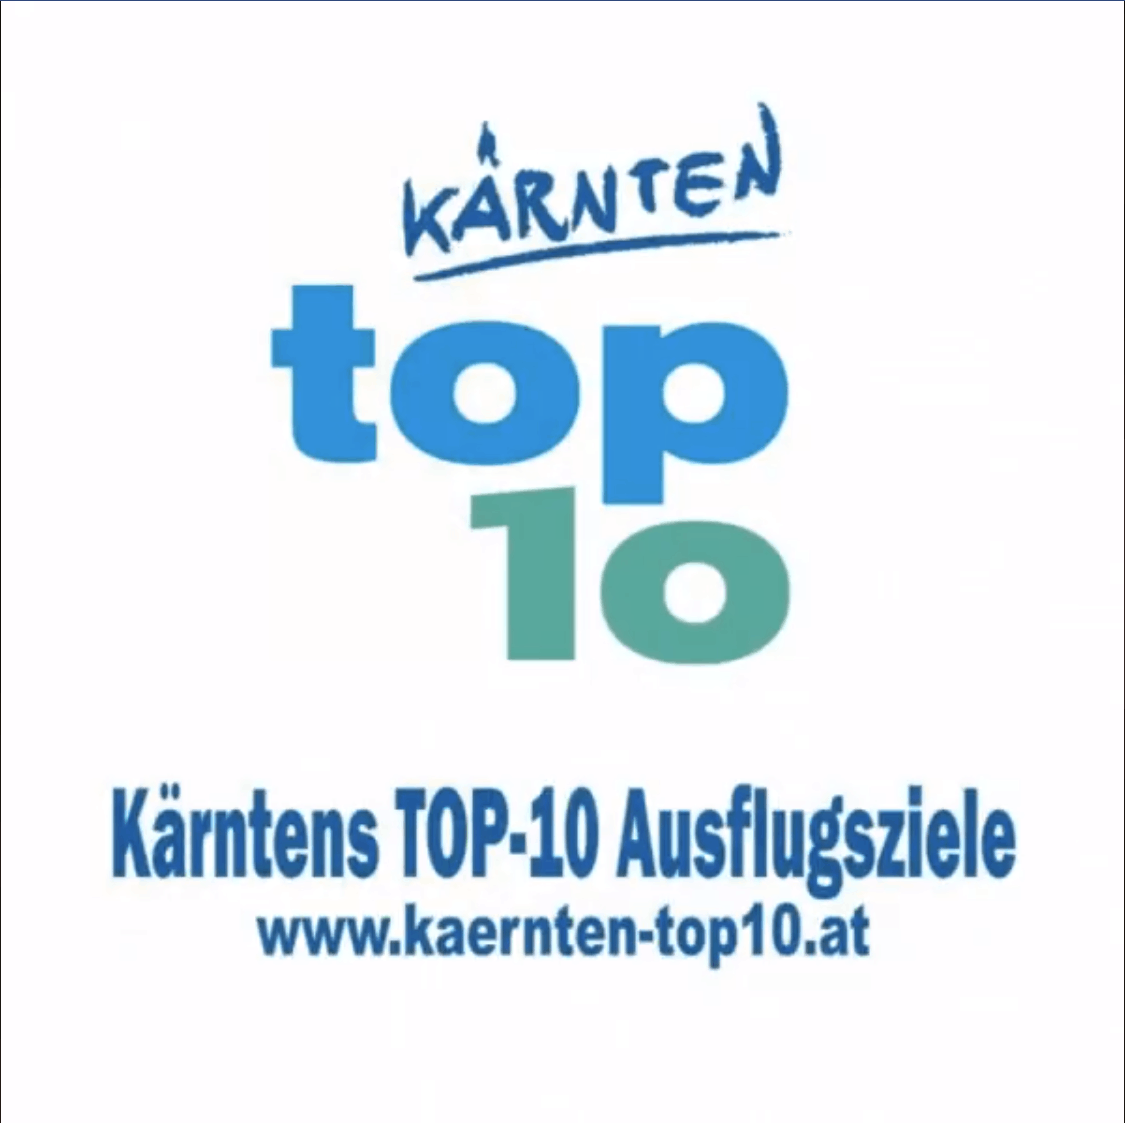 Kärntens Top 10 Ausflugsziele Pyramidenkogel - Logo und Internetadresse